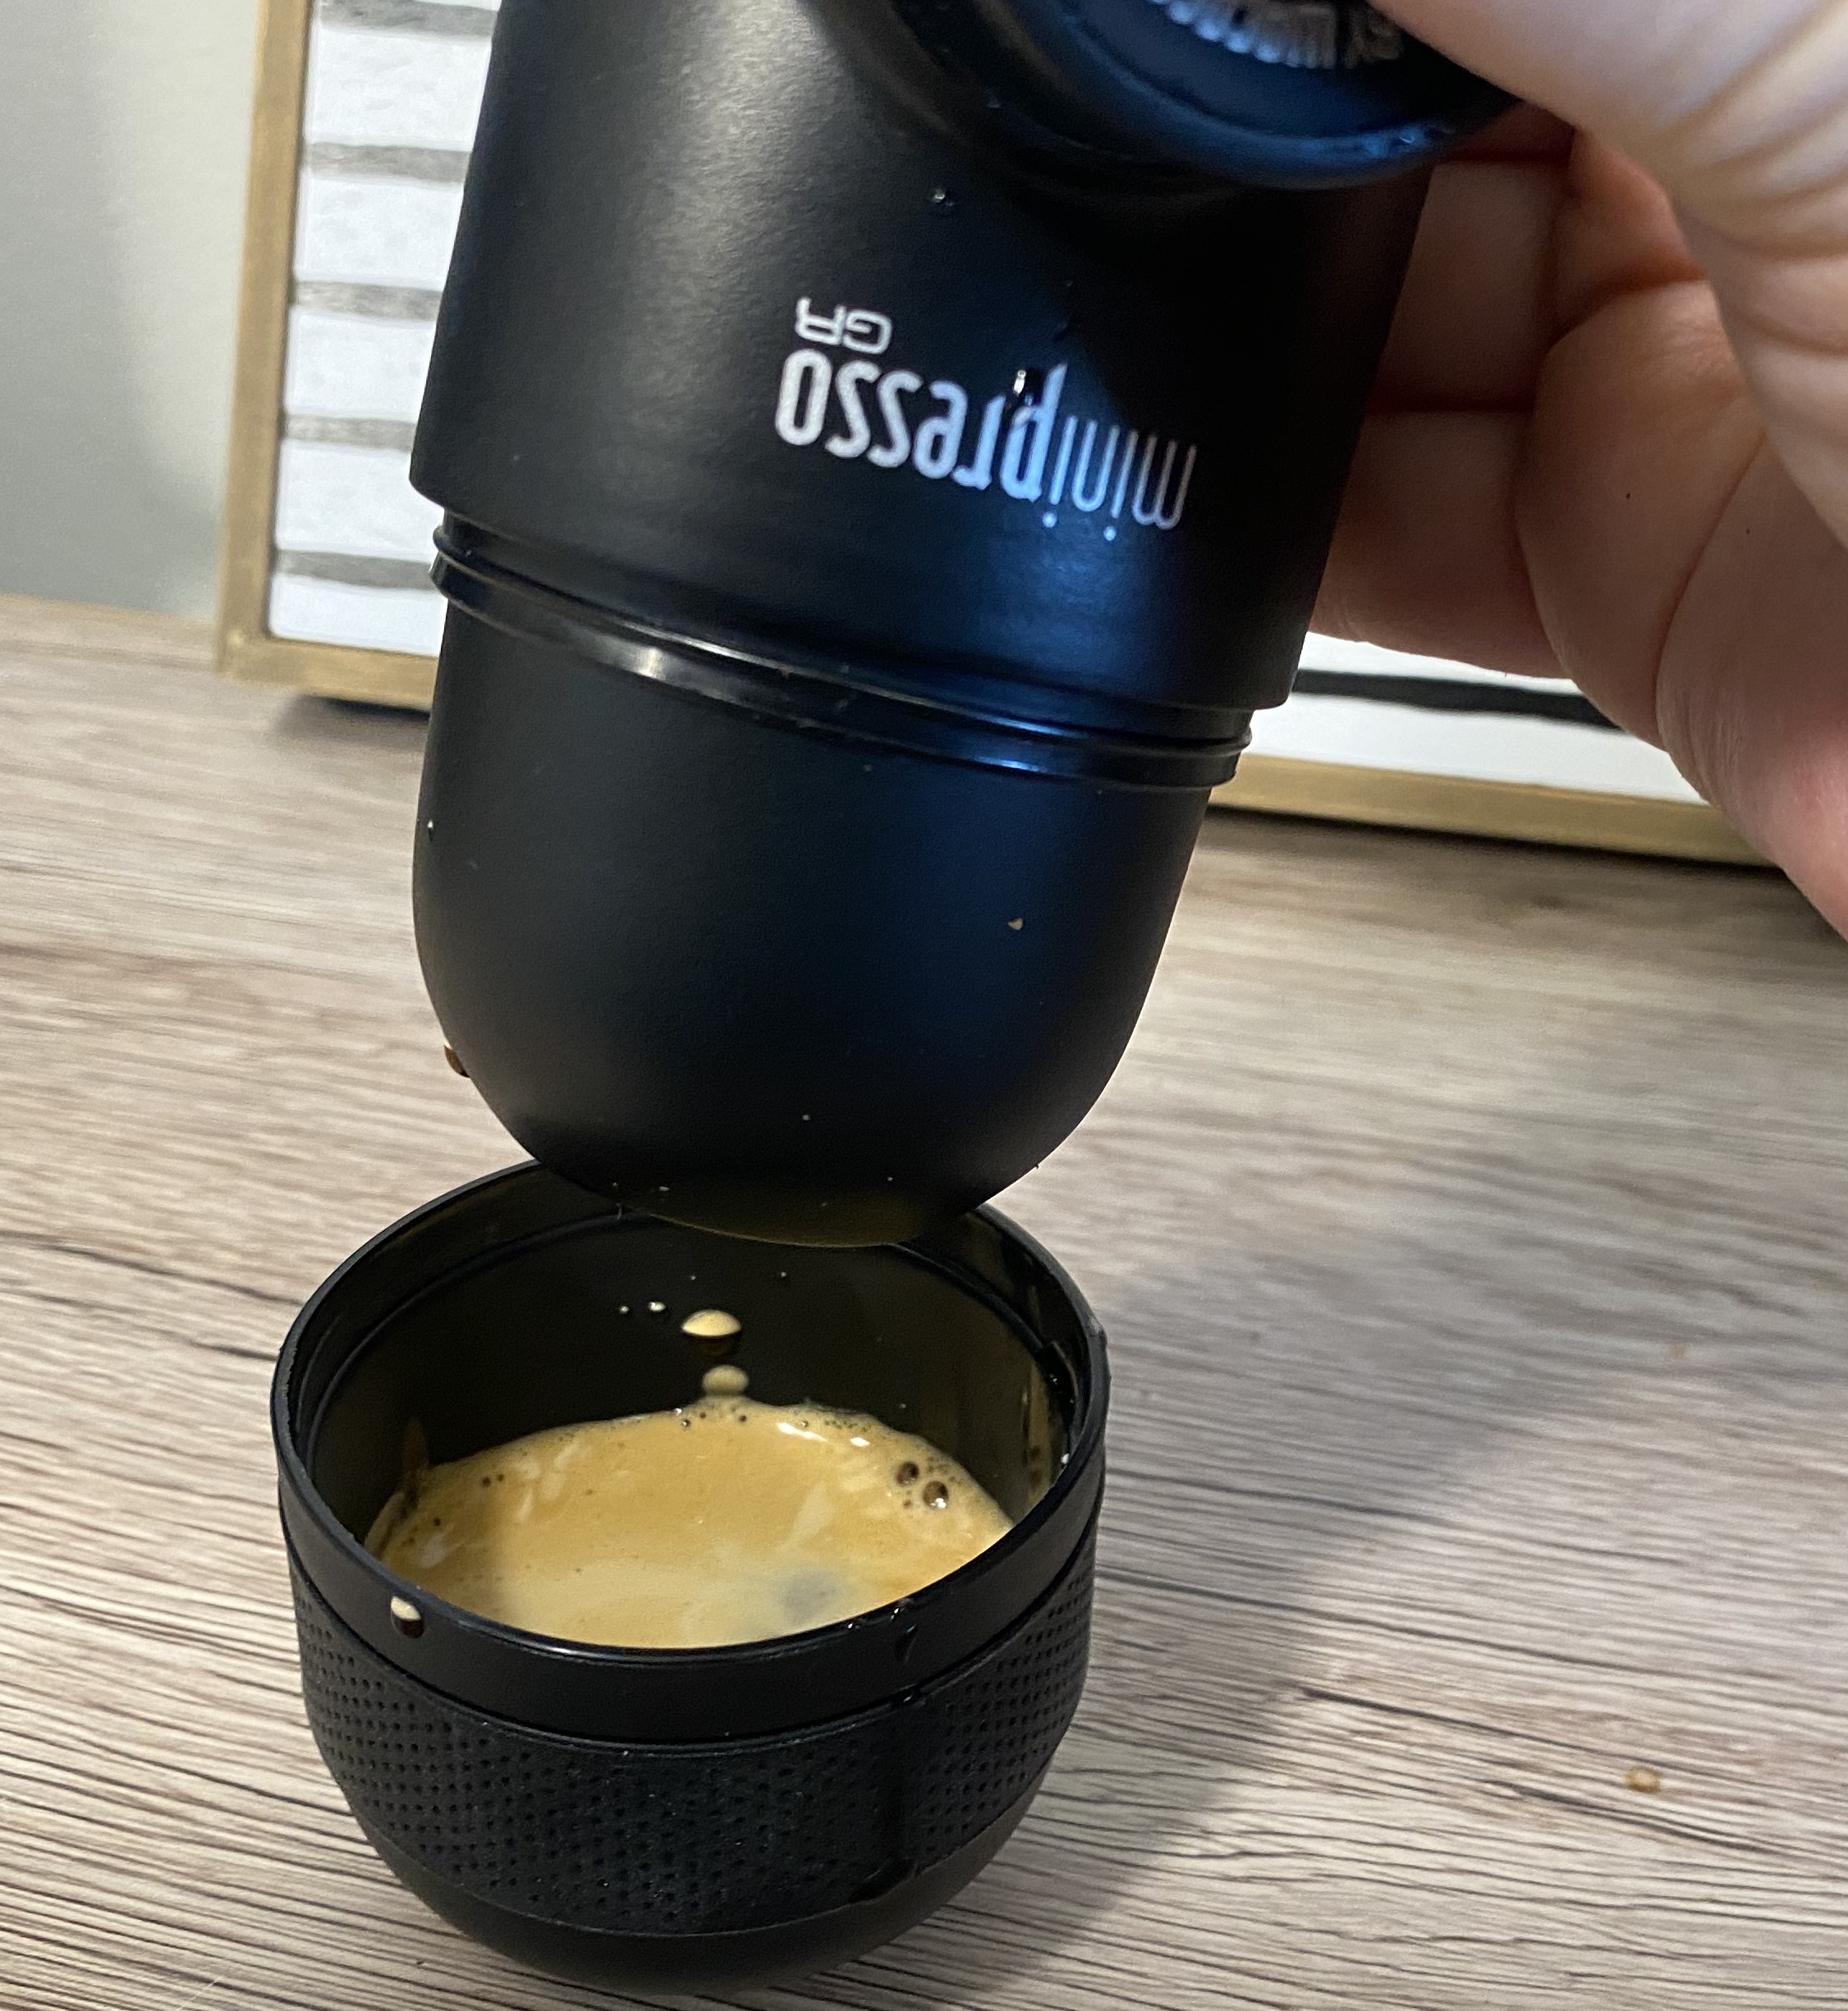 The Minipresso GR includes a built-in espresso cup